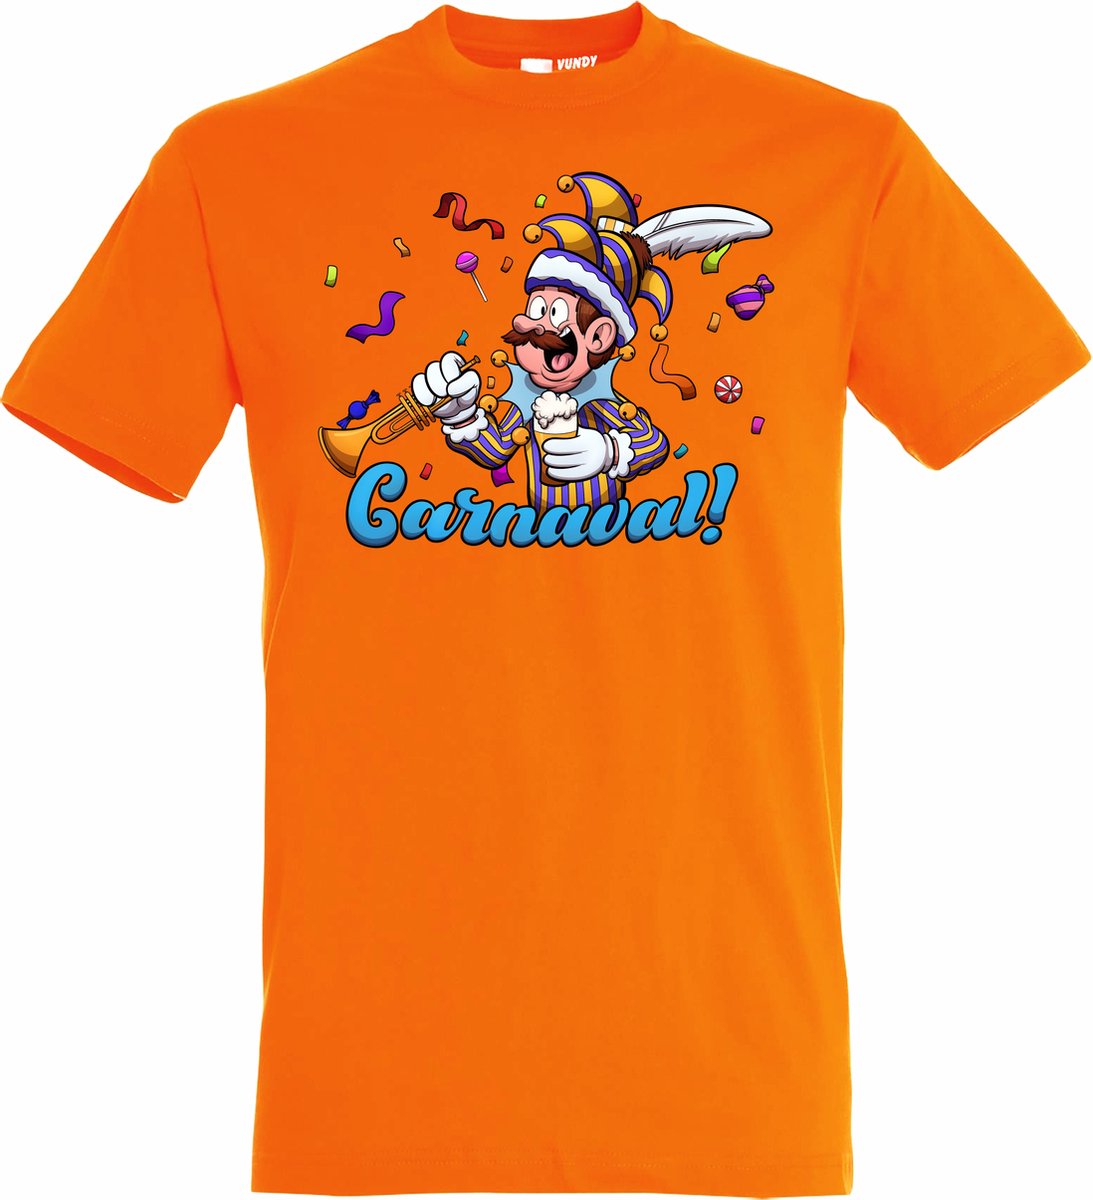 T-shirt Carnavalluh | Carnaval | Carnavalskleding Dames Heren | Oranje | maat M